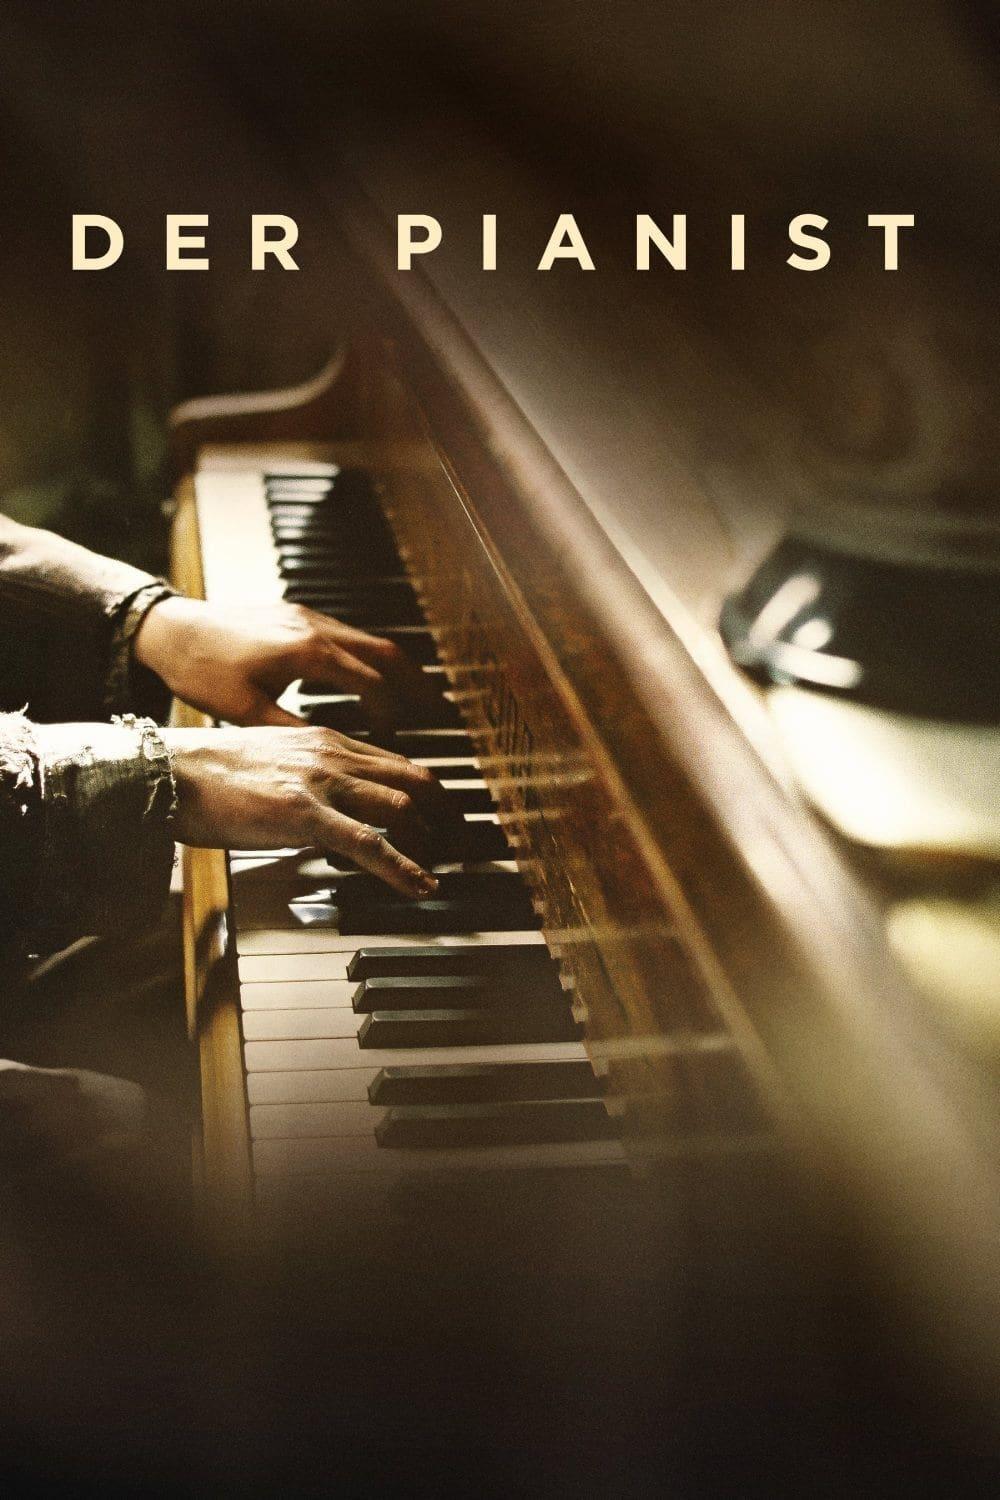 Der Pianist poster